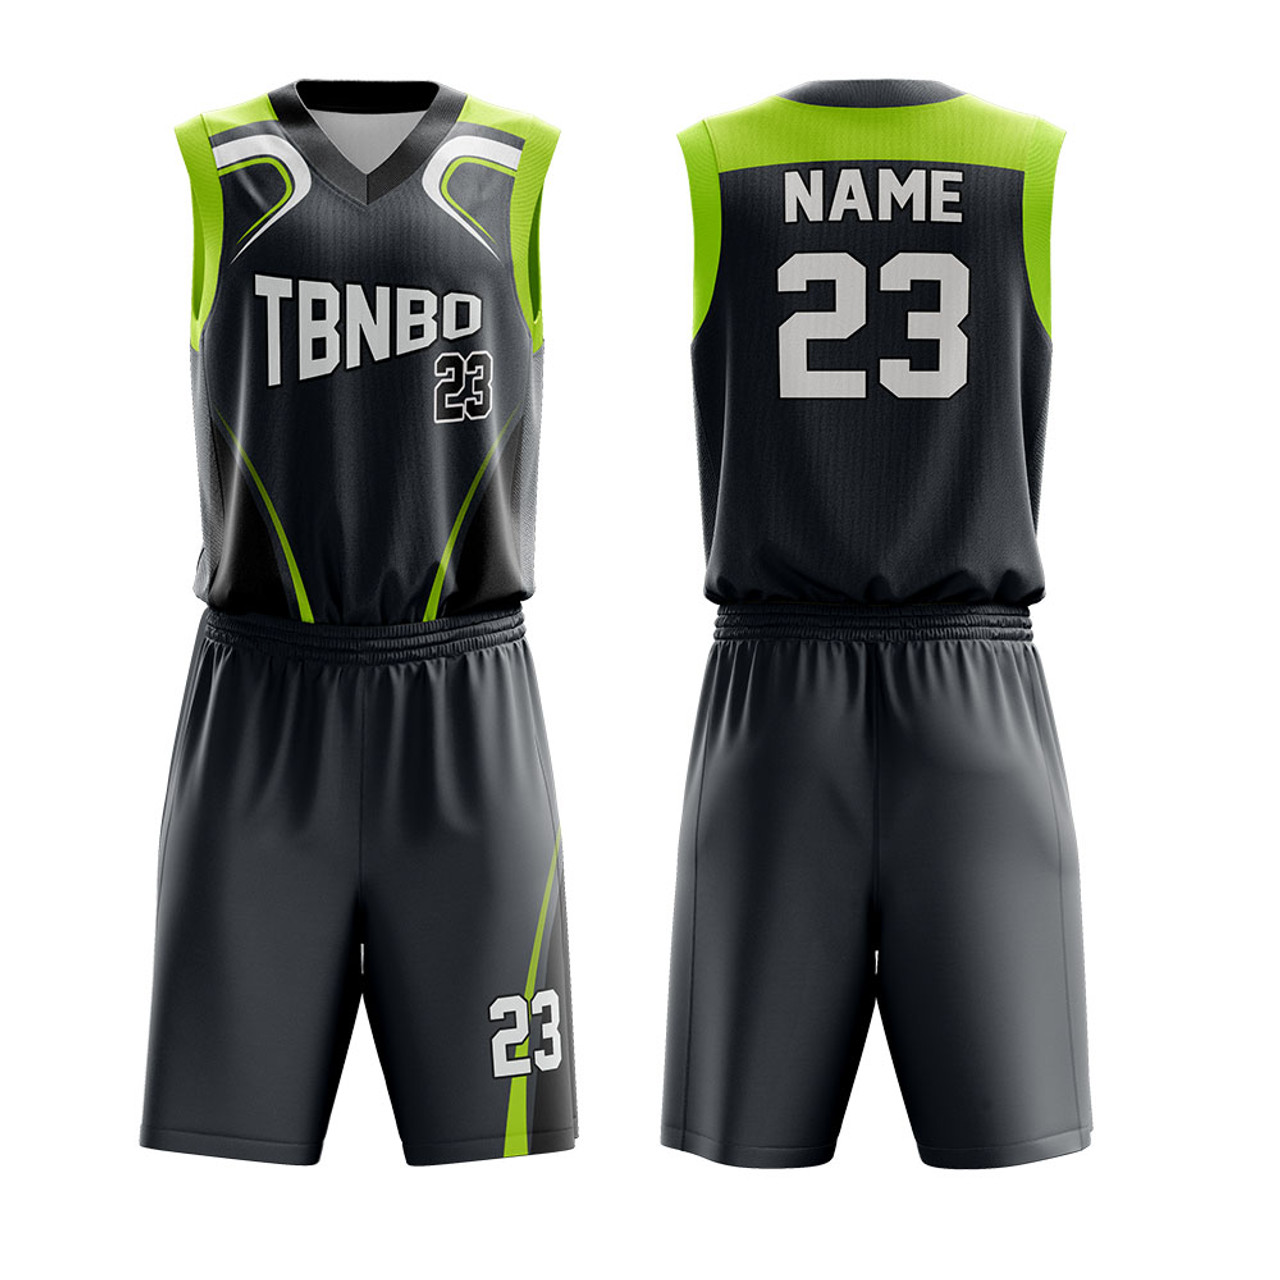 Youth Basketball Team Uniforms Sublimation Digital Printing Basketball ...